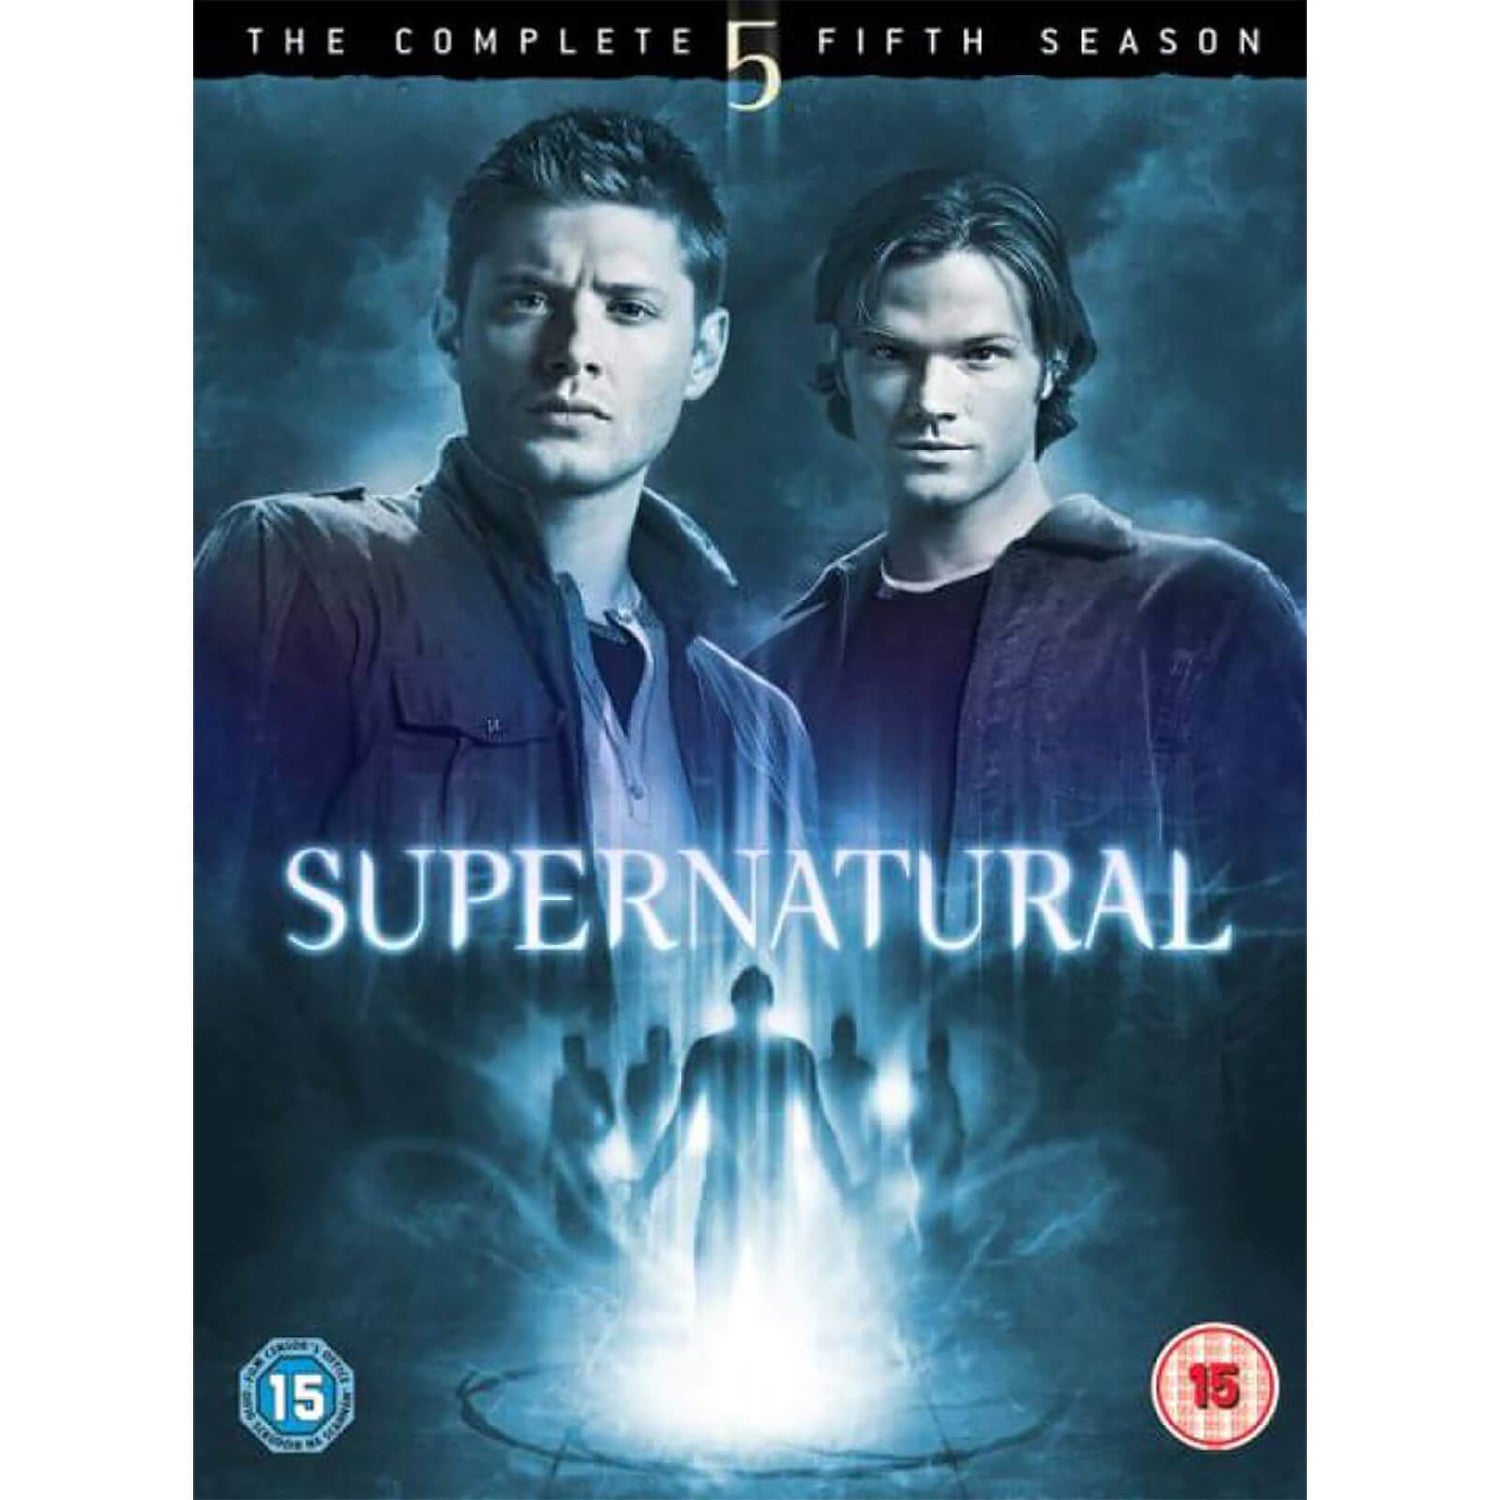 Frank Worthley Consulta Altoparlante Supernatural - Temporada 5 DVD | Zavvi España